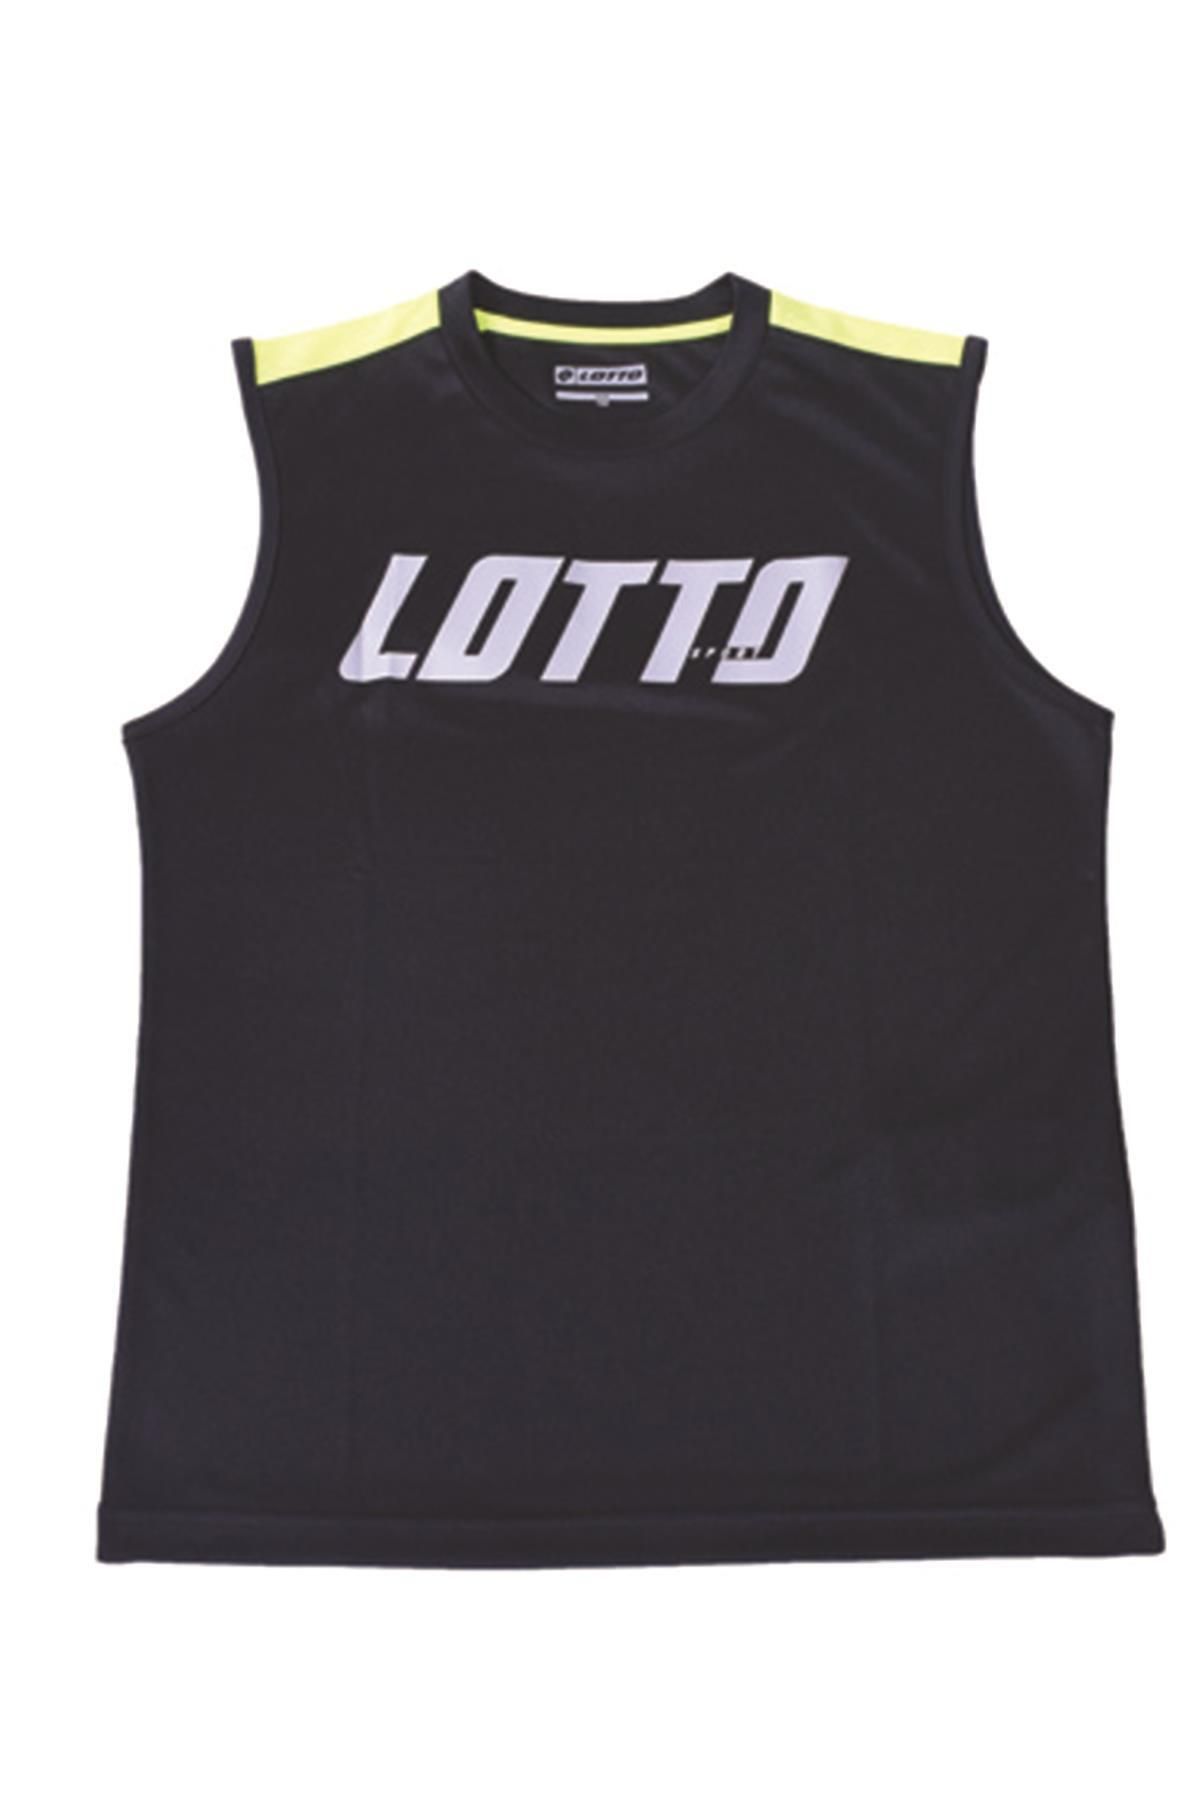 Lotto Erkek Tişört Kolsuz Sıfır Yaka R8309 Bılly Tank Pl B